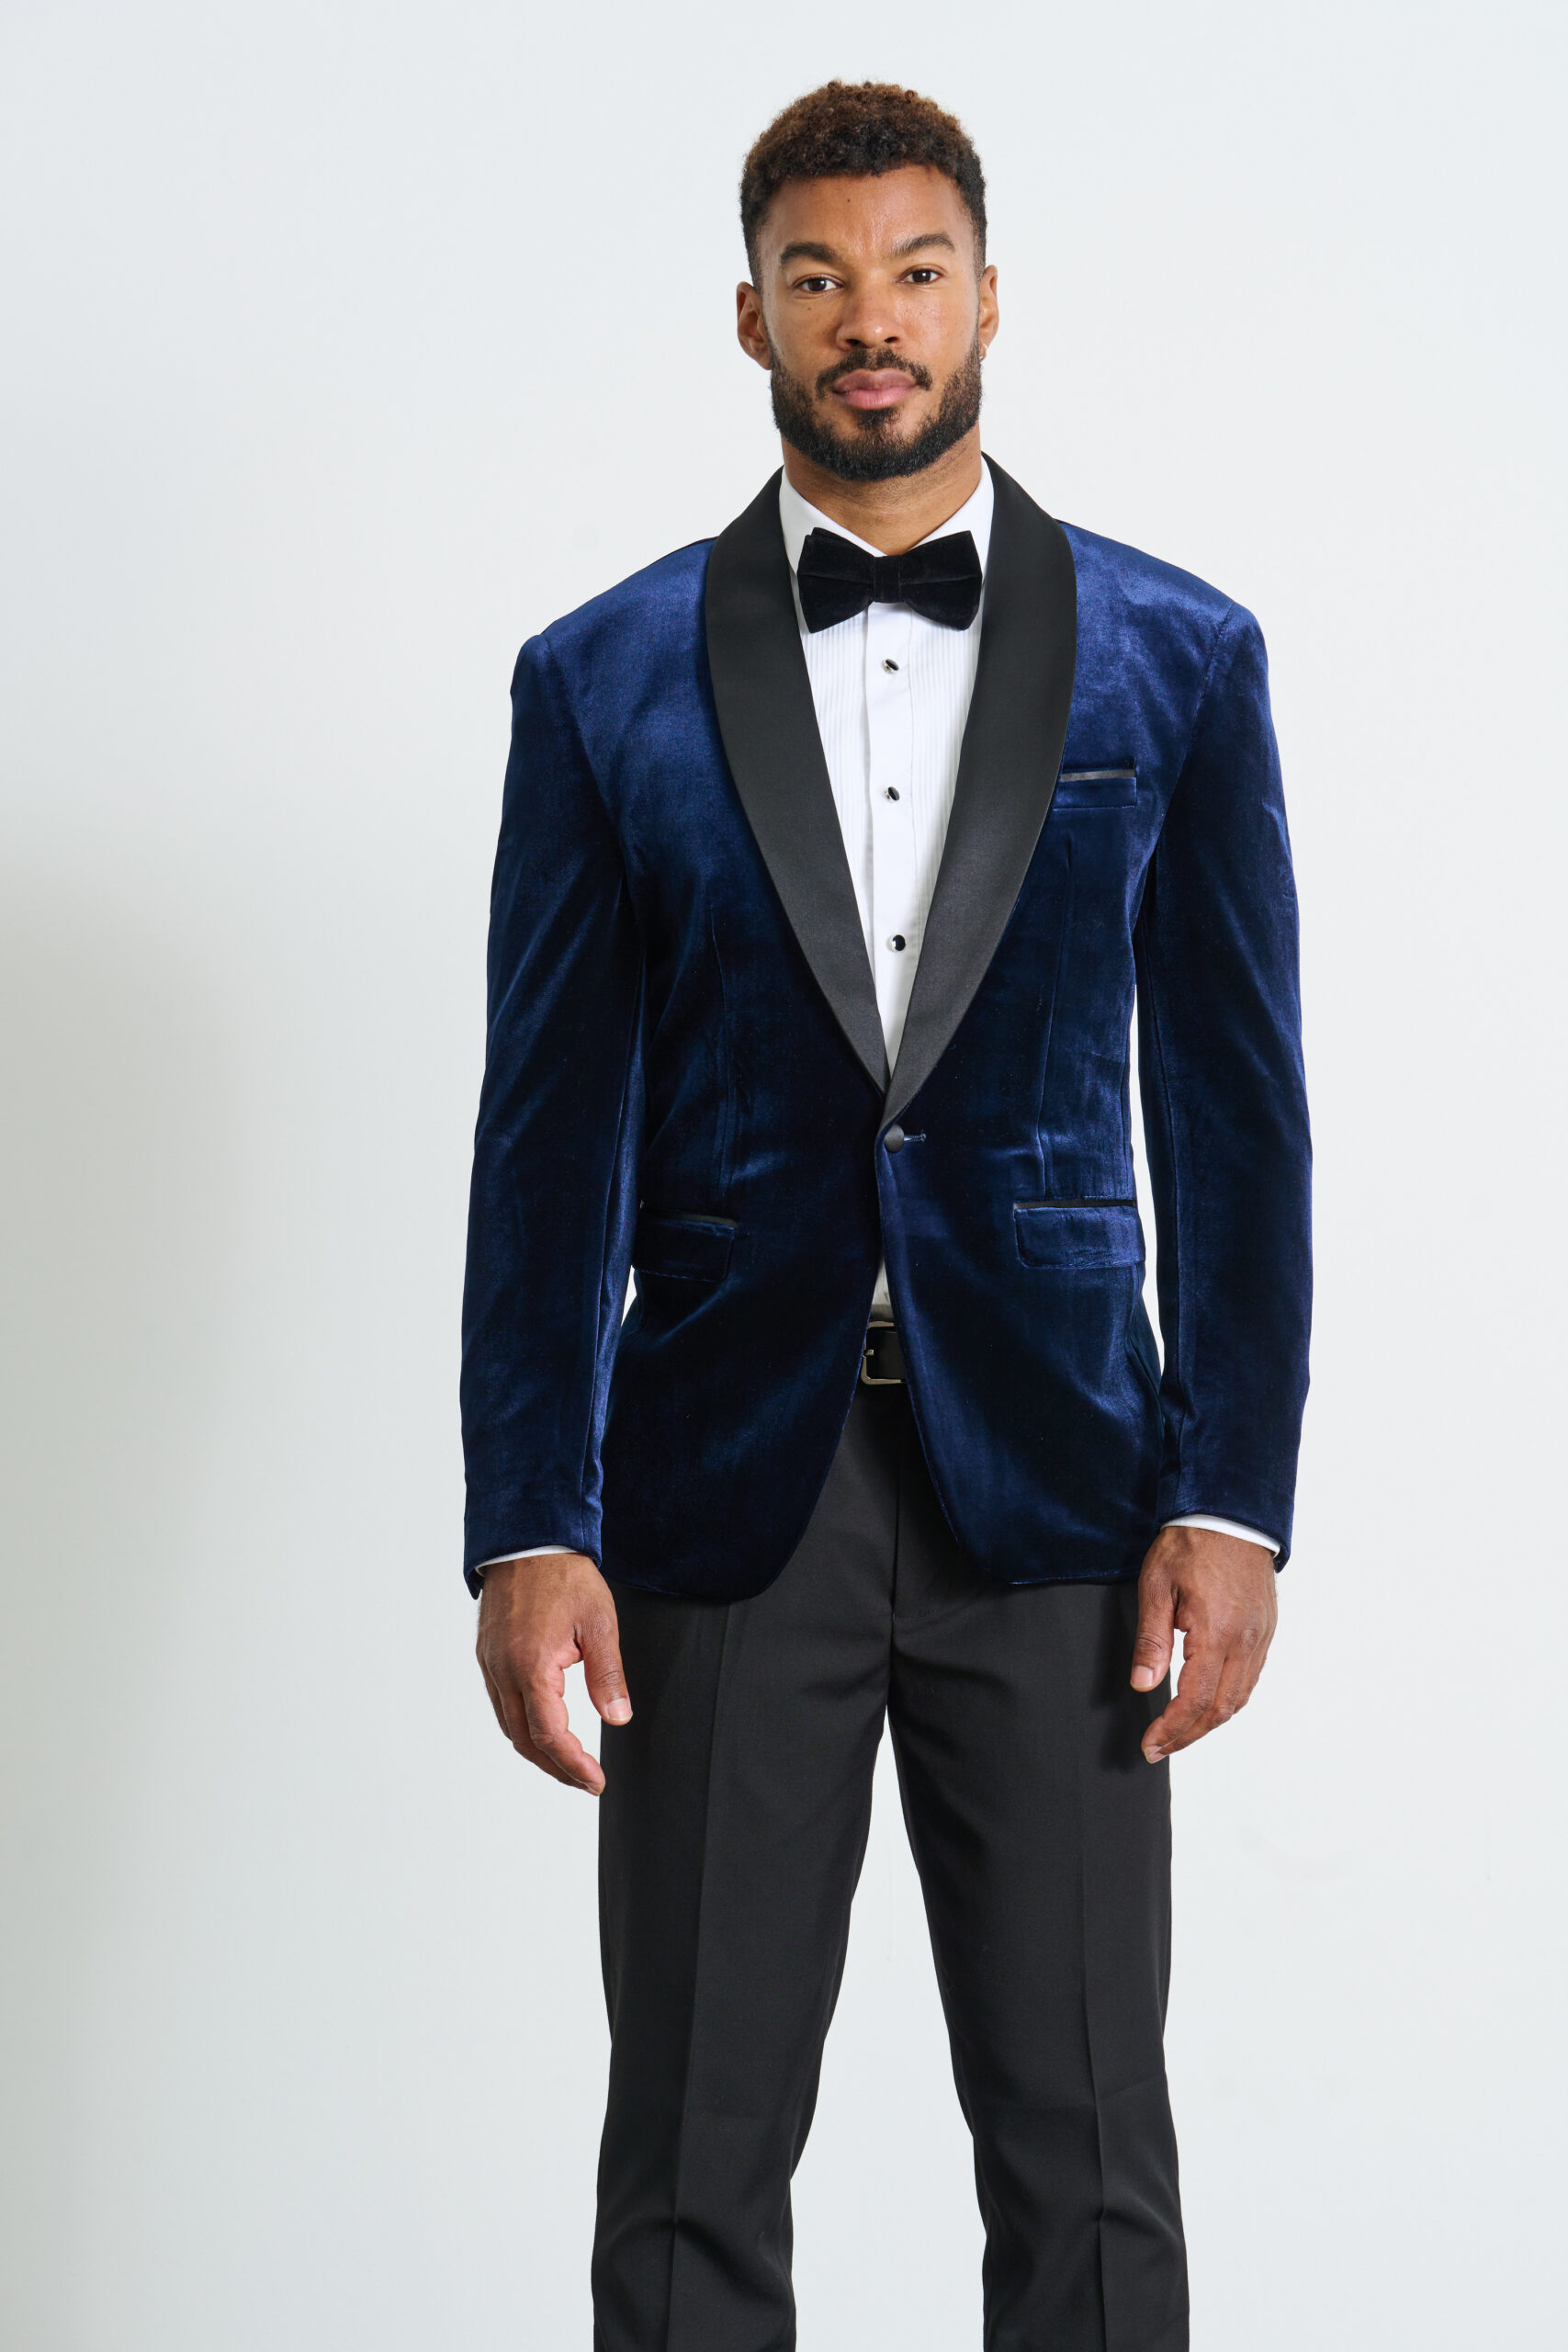 Mens Black Tuxedo | Wedding Double Breasted Dinner Suit